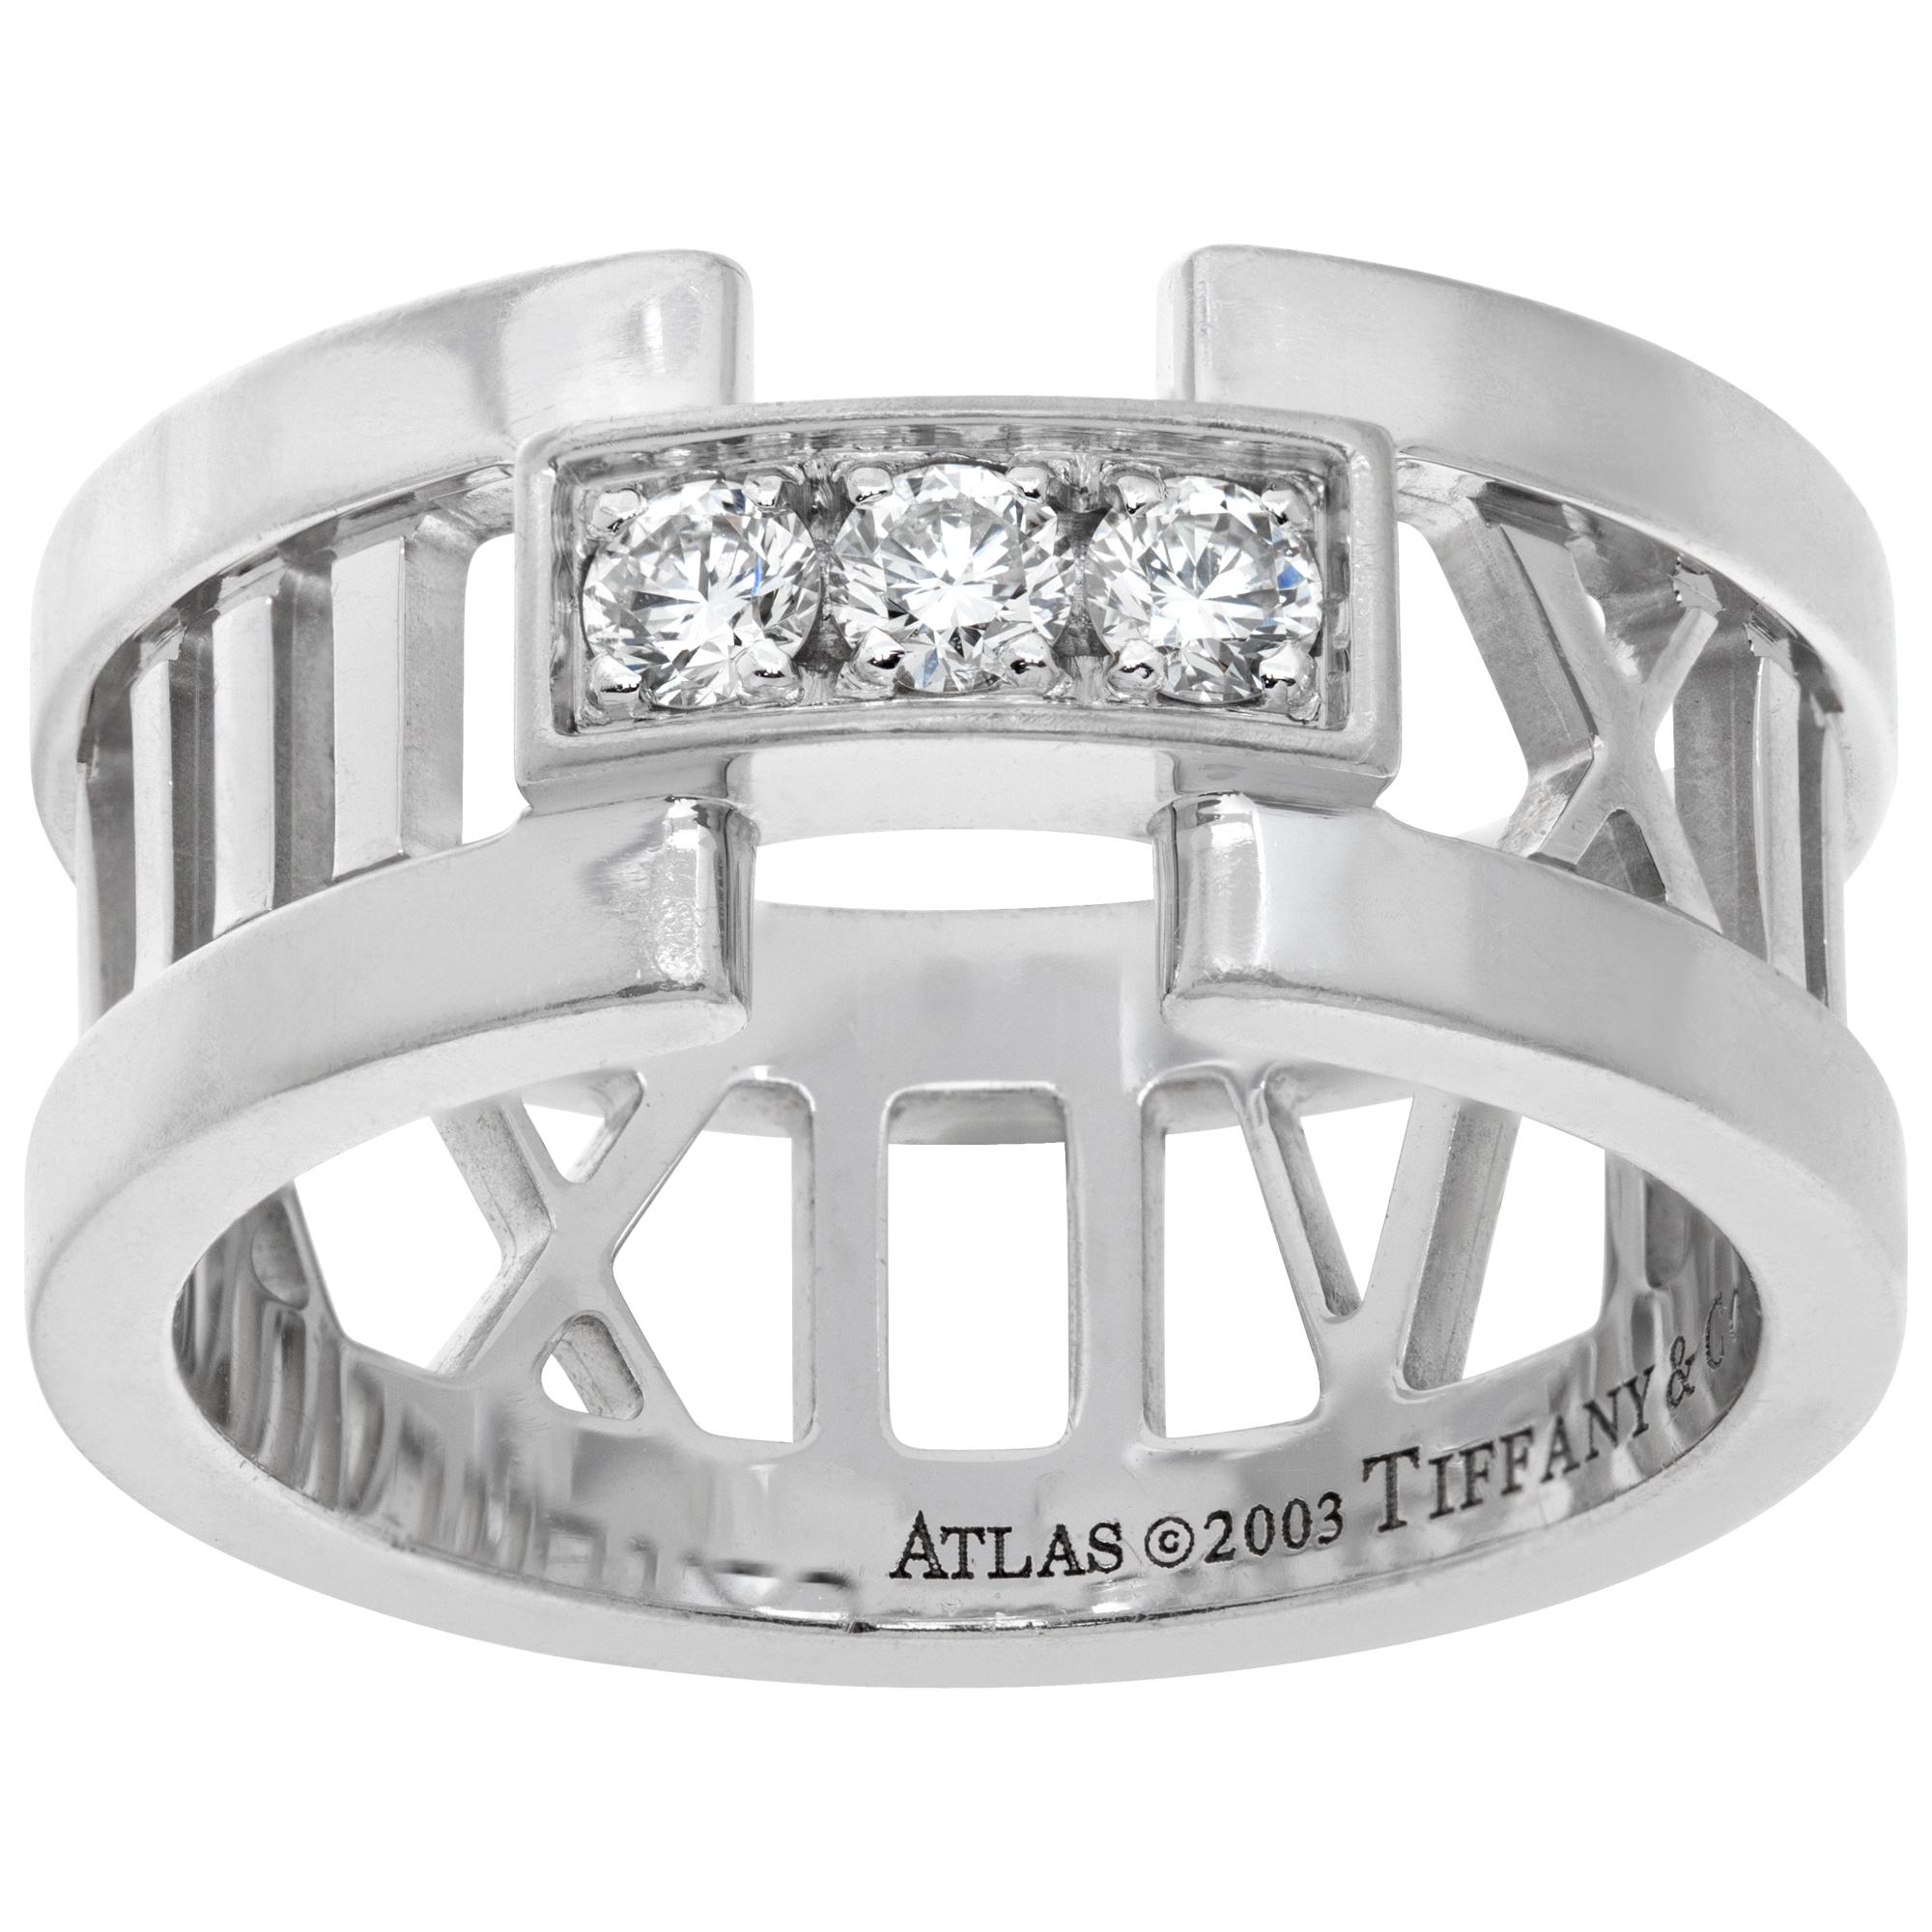 Tiffany & Co. Atlas 3 diamond ring in white gold For Sale